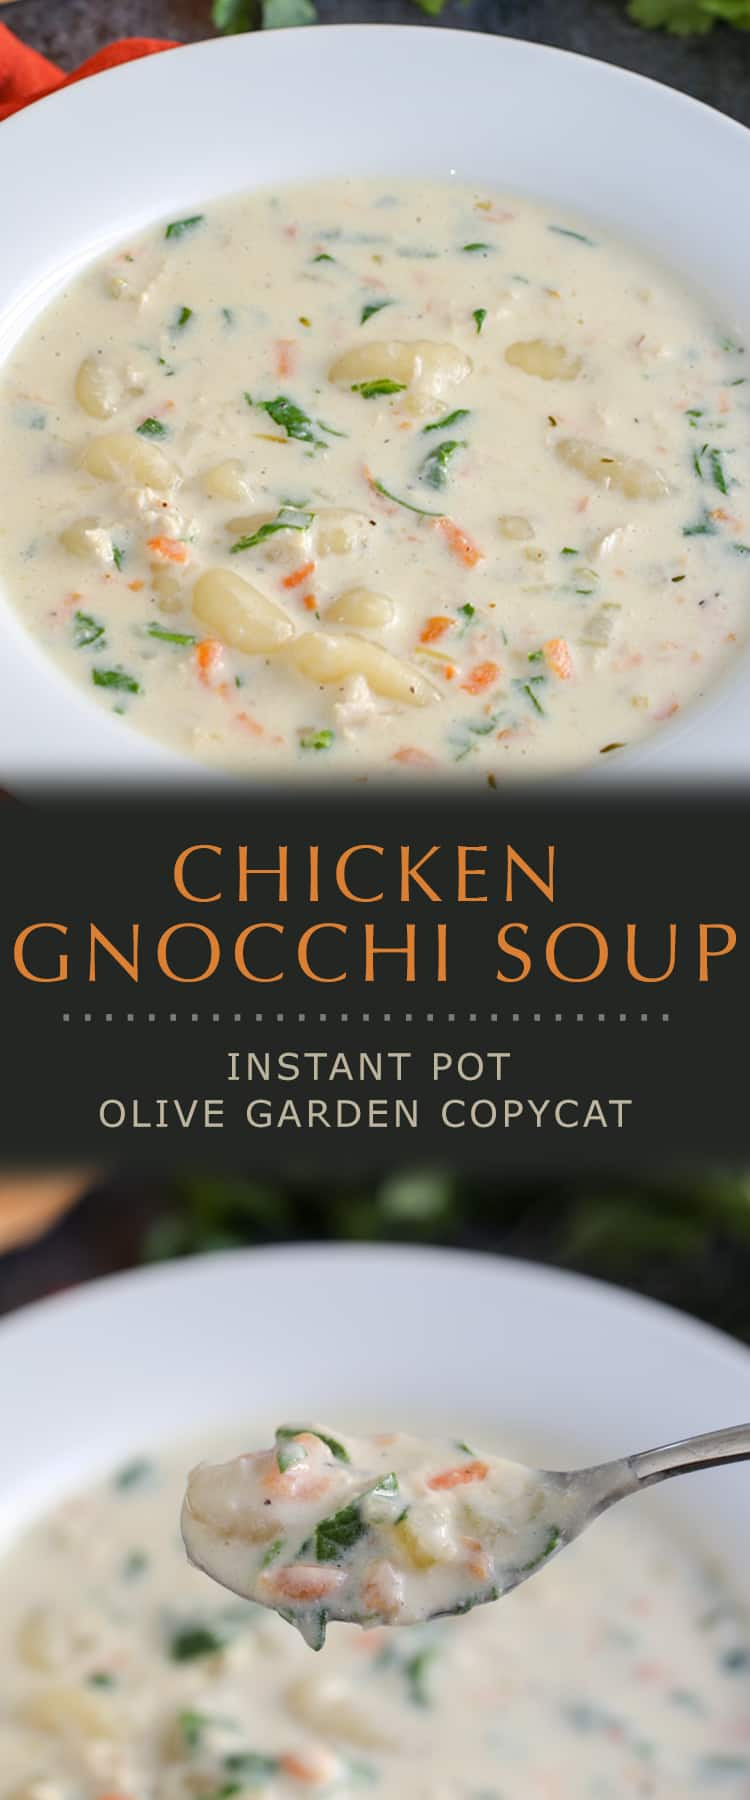 Olive Garden Chicken Gnocchi Soup Copycat Recipe
 Instant Pot Chicken Gnocchi Soup